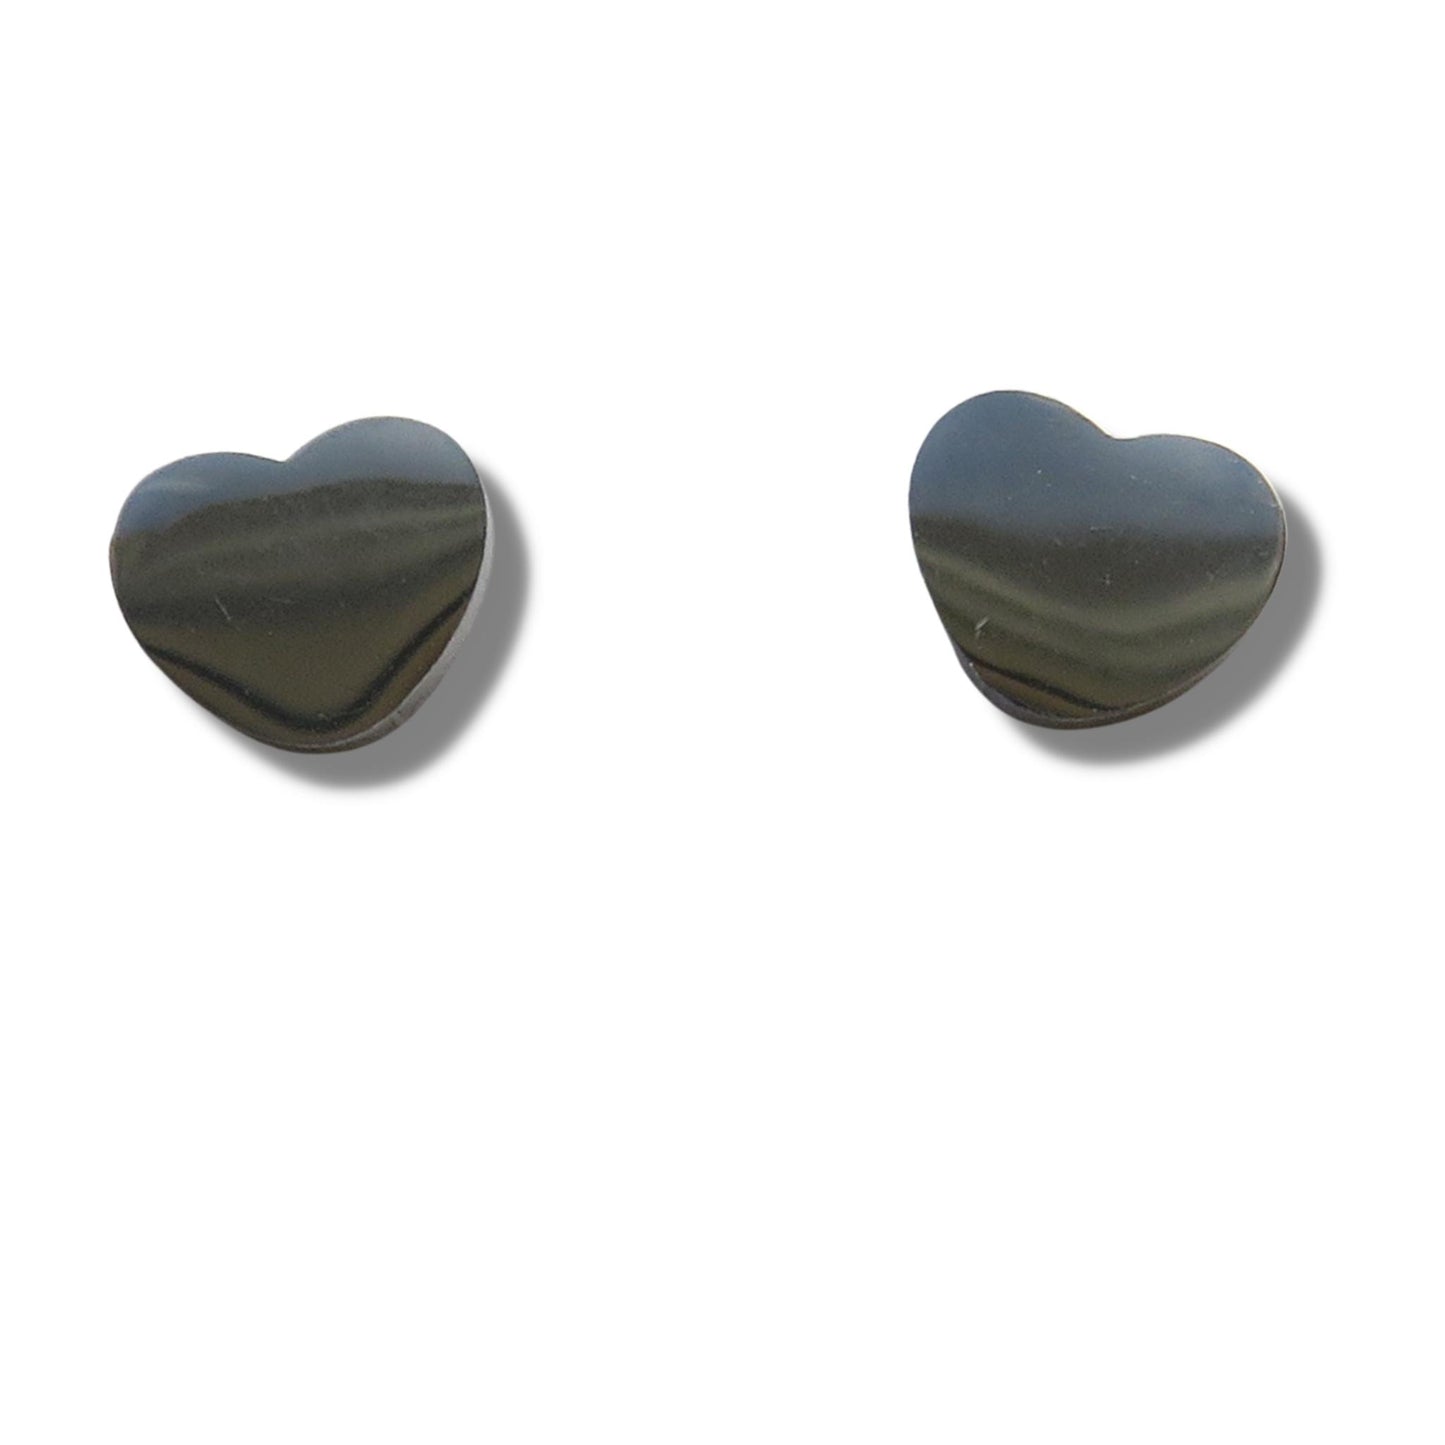 Stainless Steel Heart Stud Earrings - Hypoallergenic